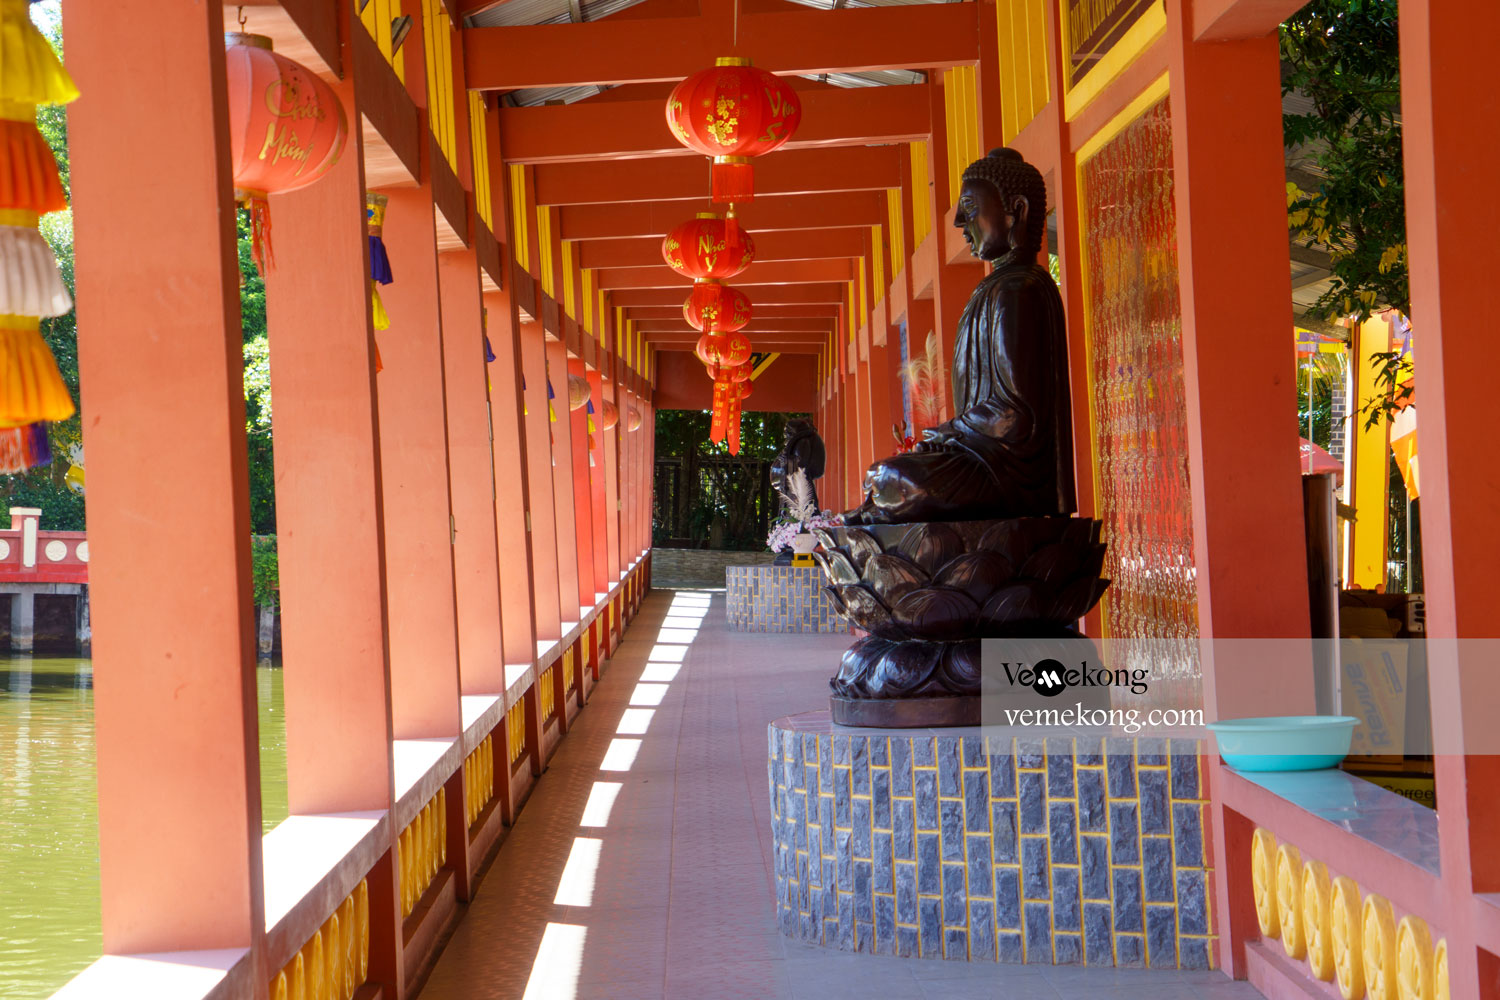 Phat Hoc 2 Pagoda (Buddhist Pagoda 2) – Things to See in Soc Trang, Vietnam